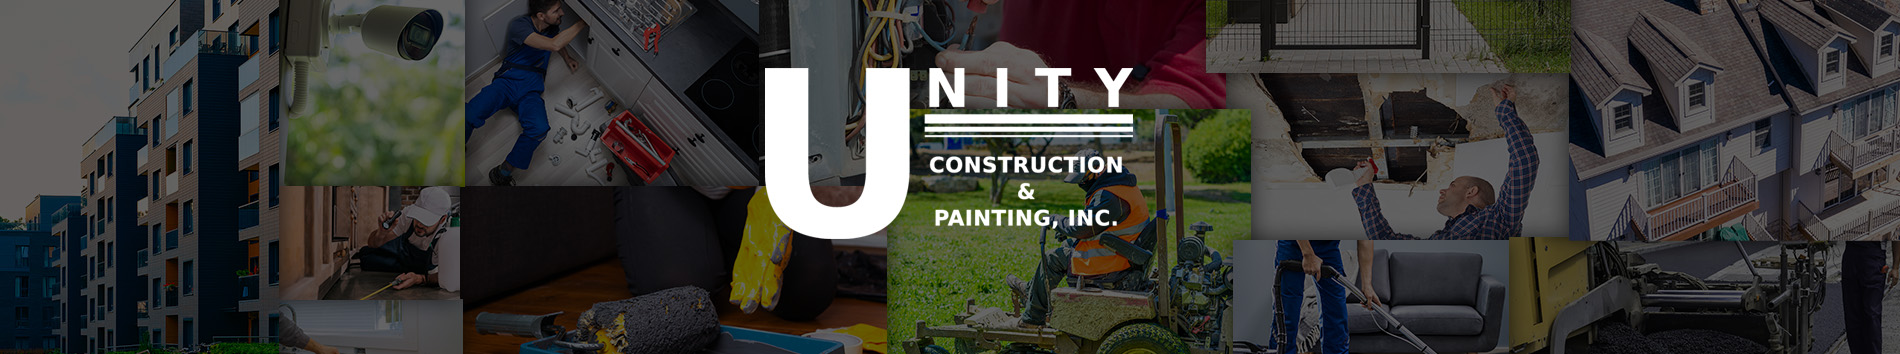 Unity Construction & Painting, Inc.